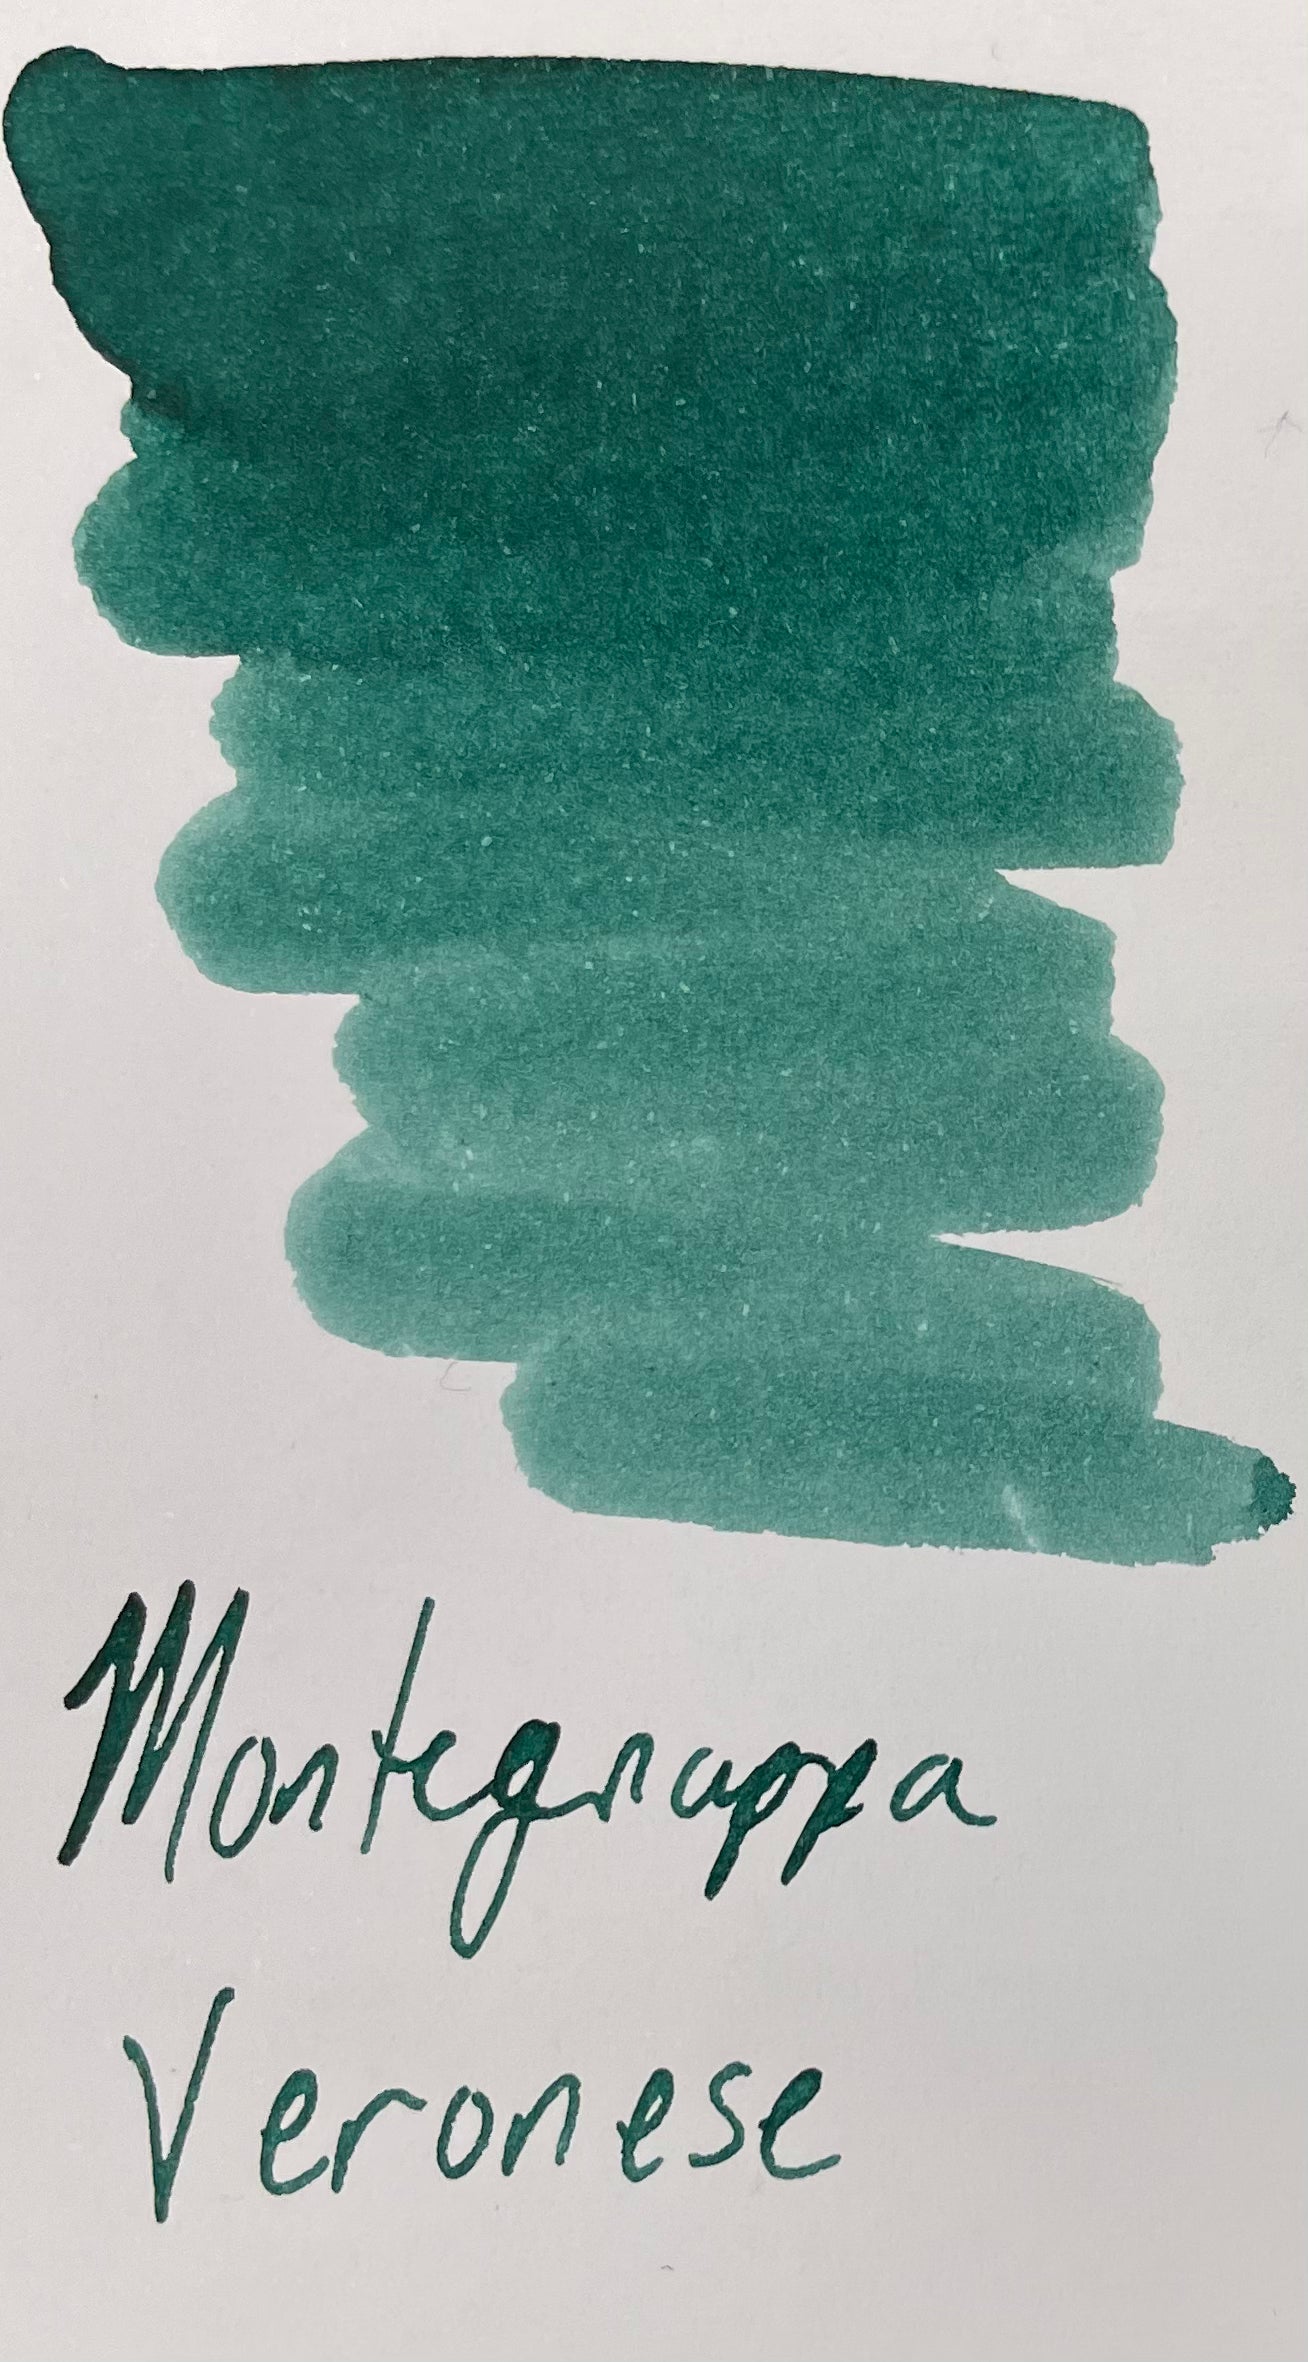 Montegrappa Ink Bottle - 50ml - Veronese Green-Pen Boutique Ltd